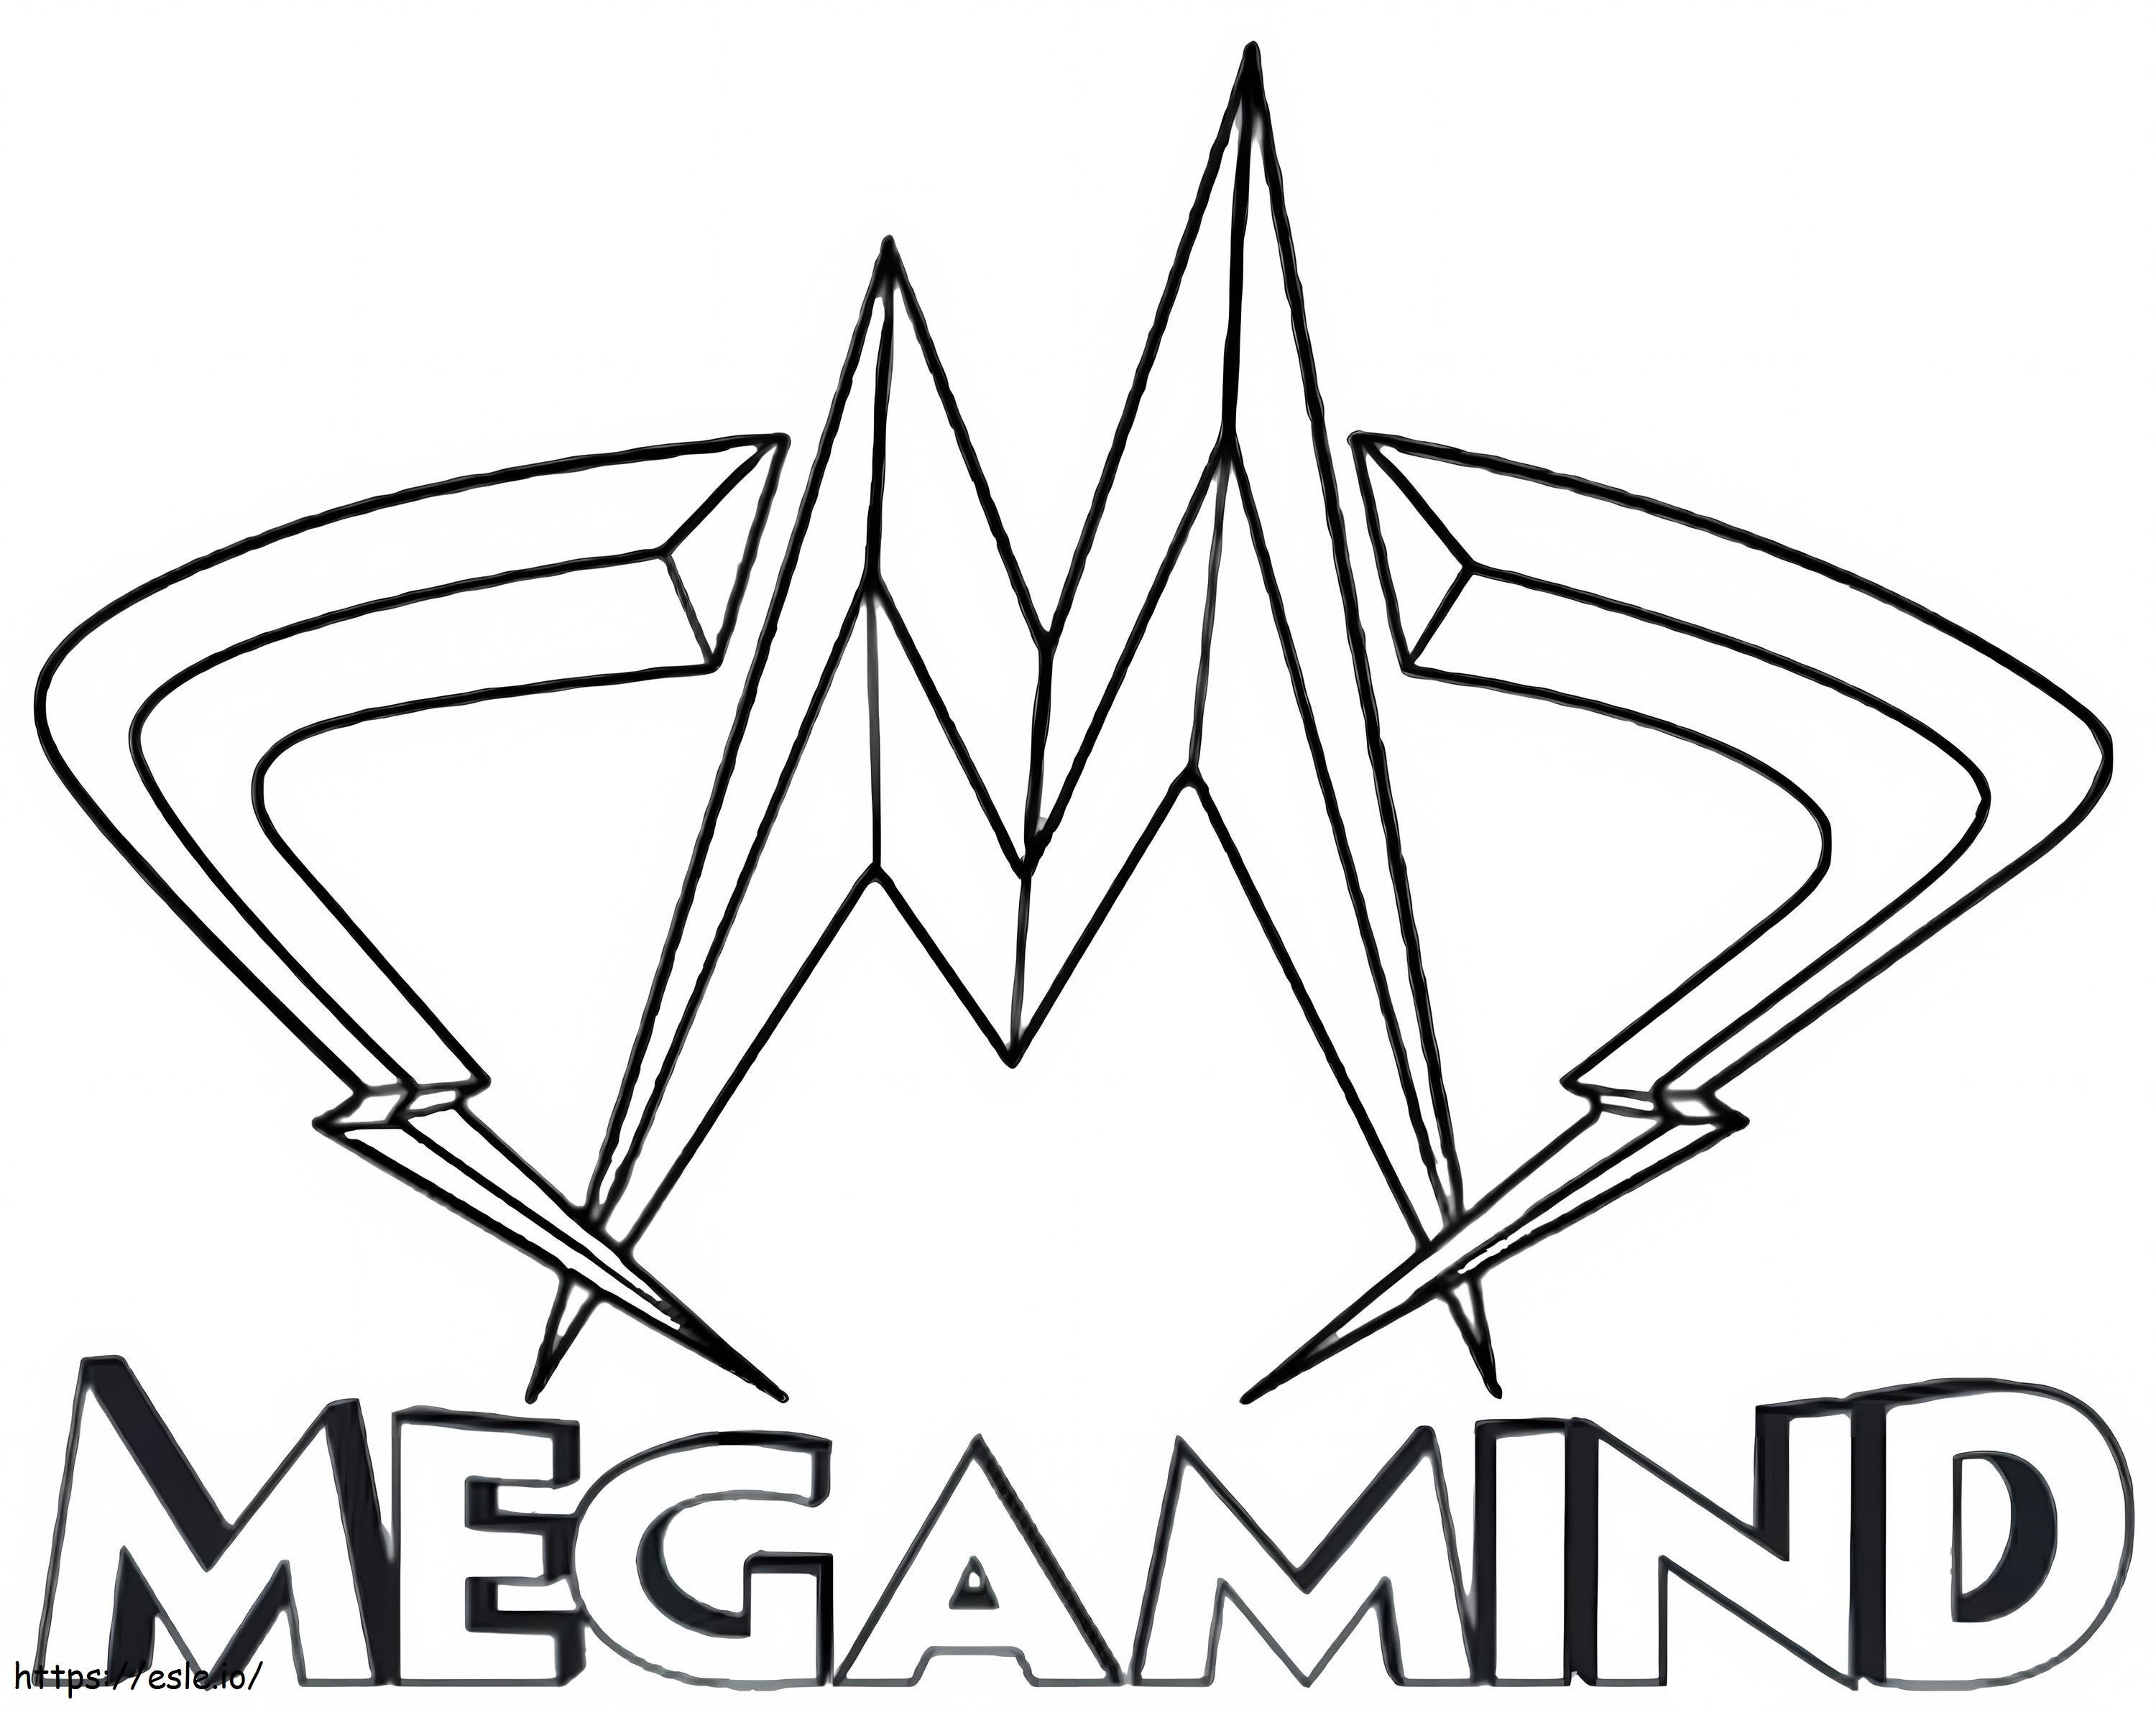 Logo Megamocy kolorowanka